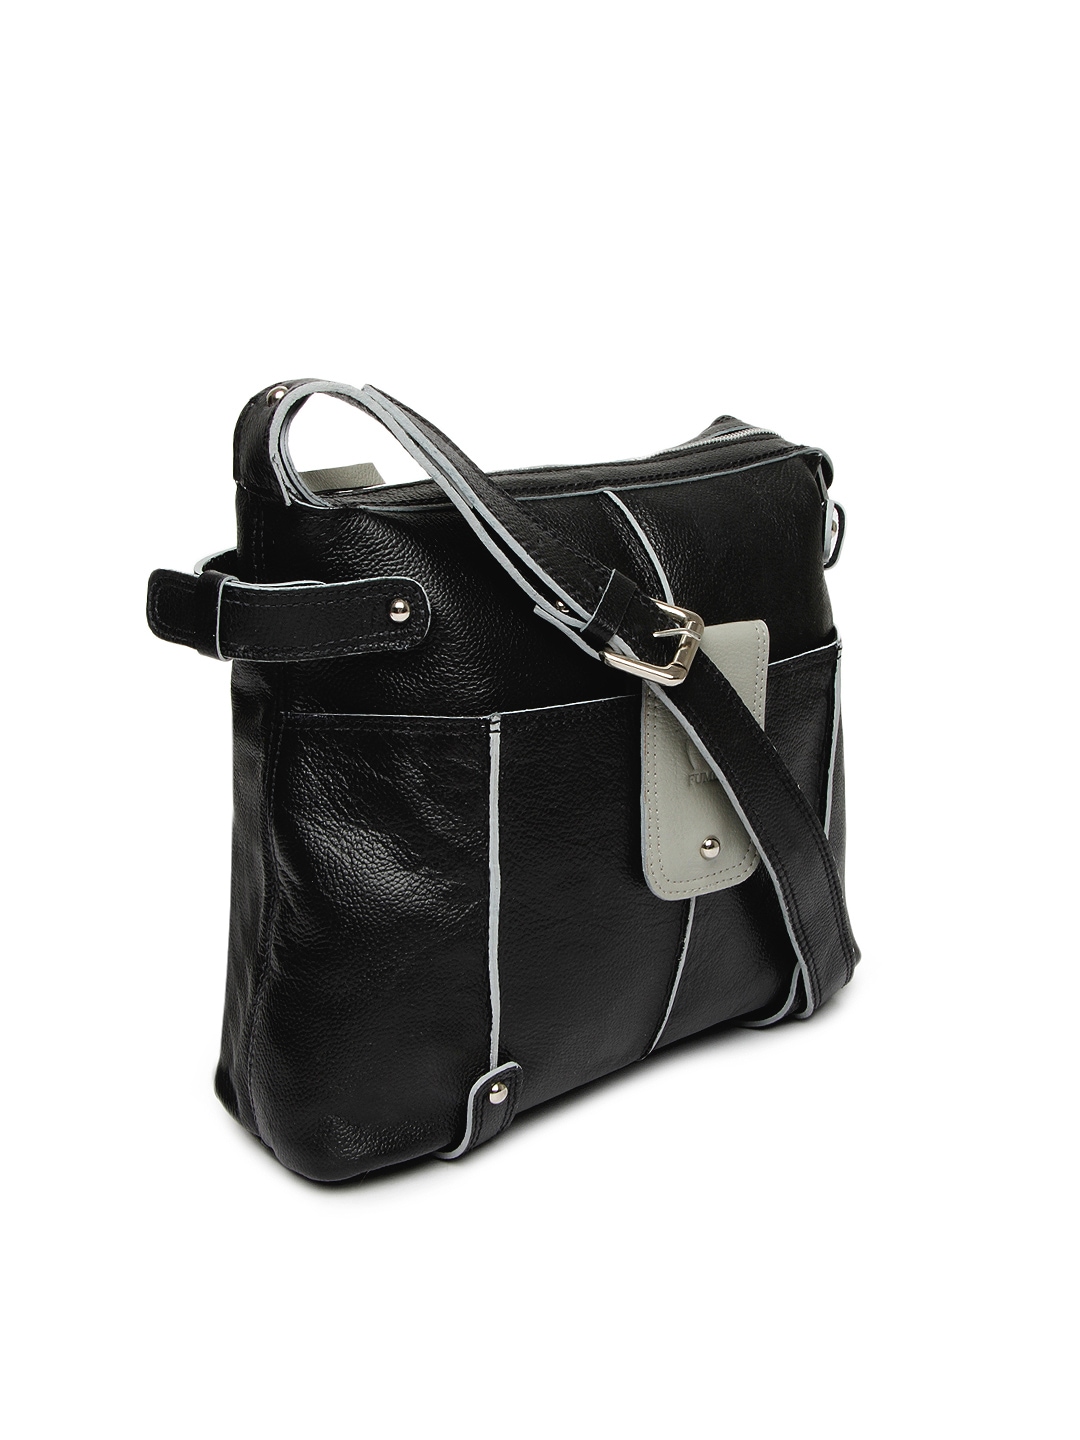 Myntra Fume Black Leather Sling Bag 432365 | Buy Myntra Fume Handbags at best price online. All ...